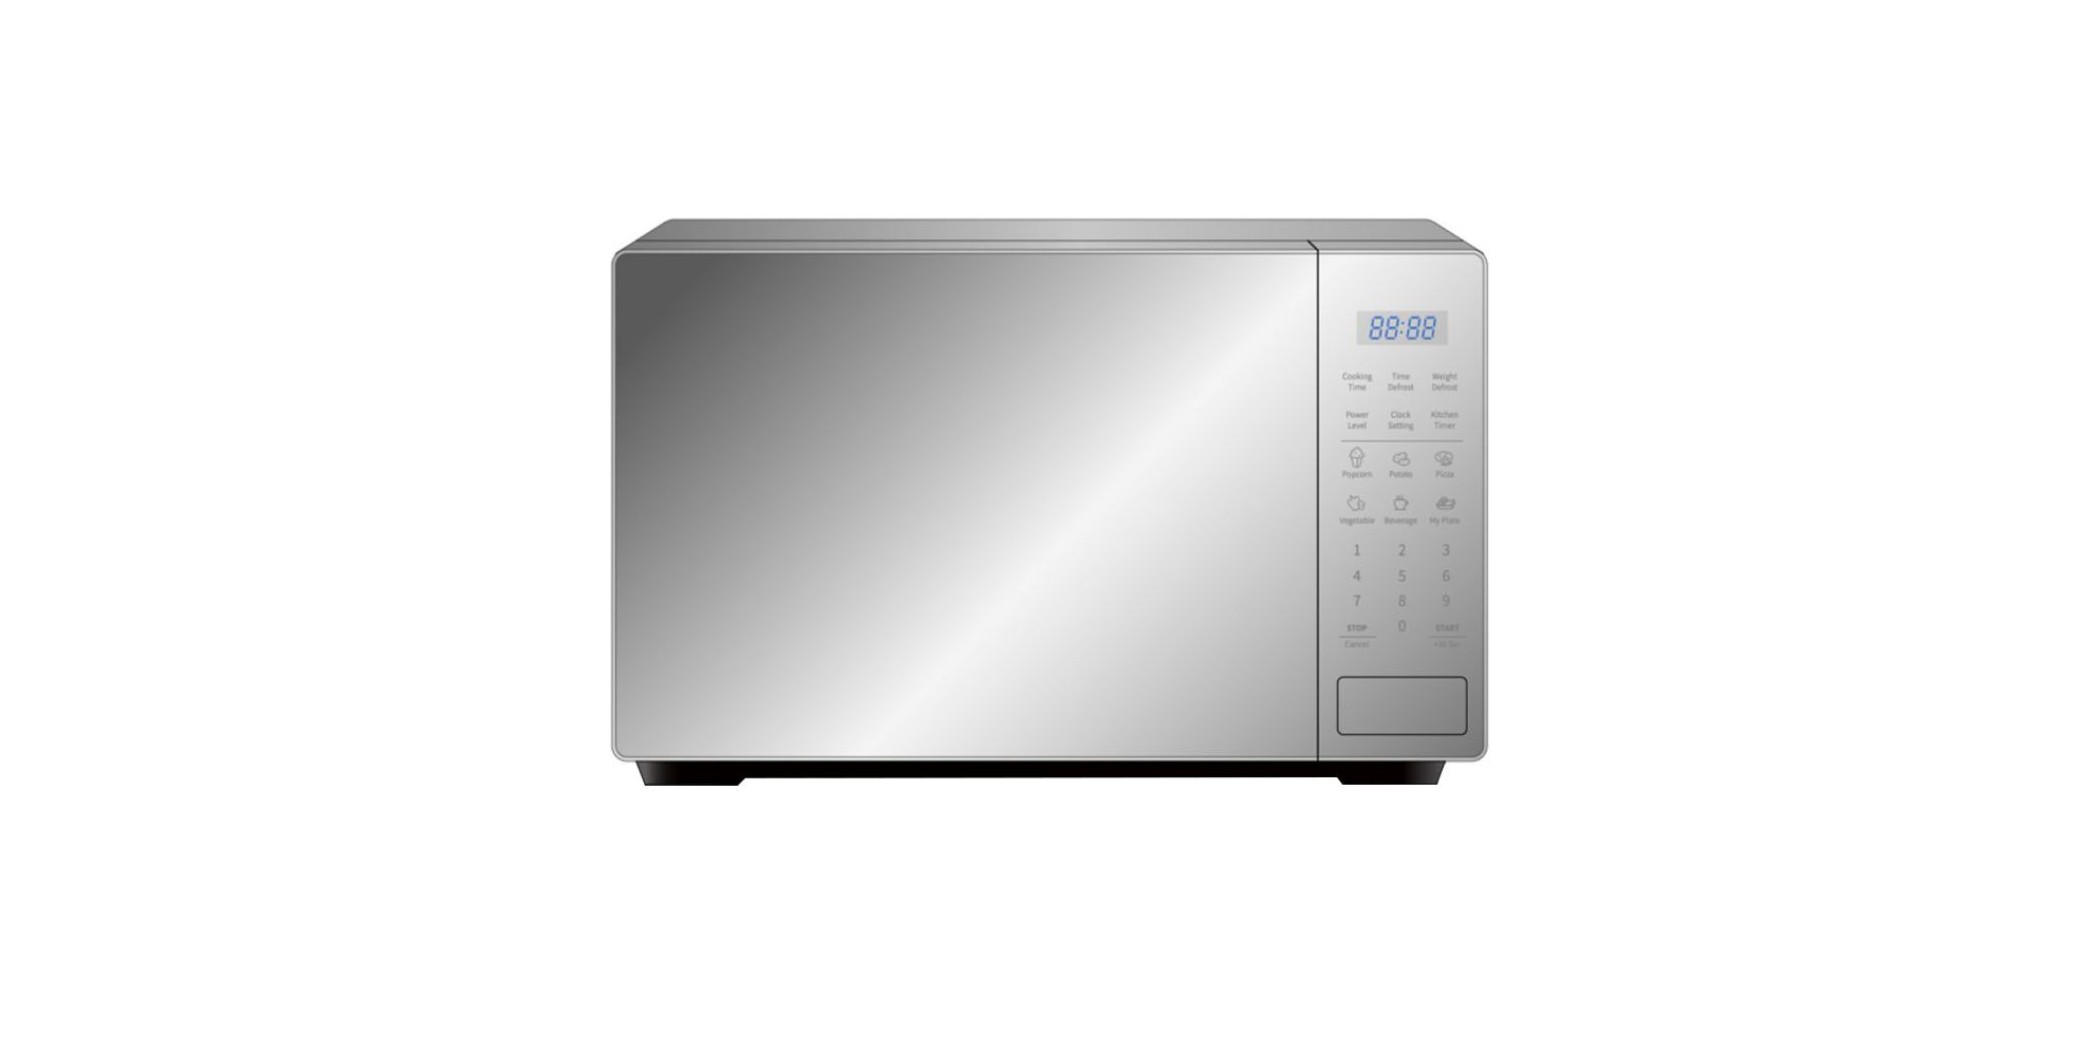 Hisense H20MOMS11 Microwave Oven